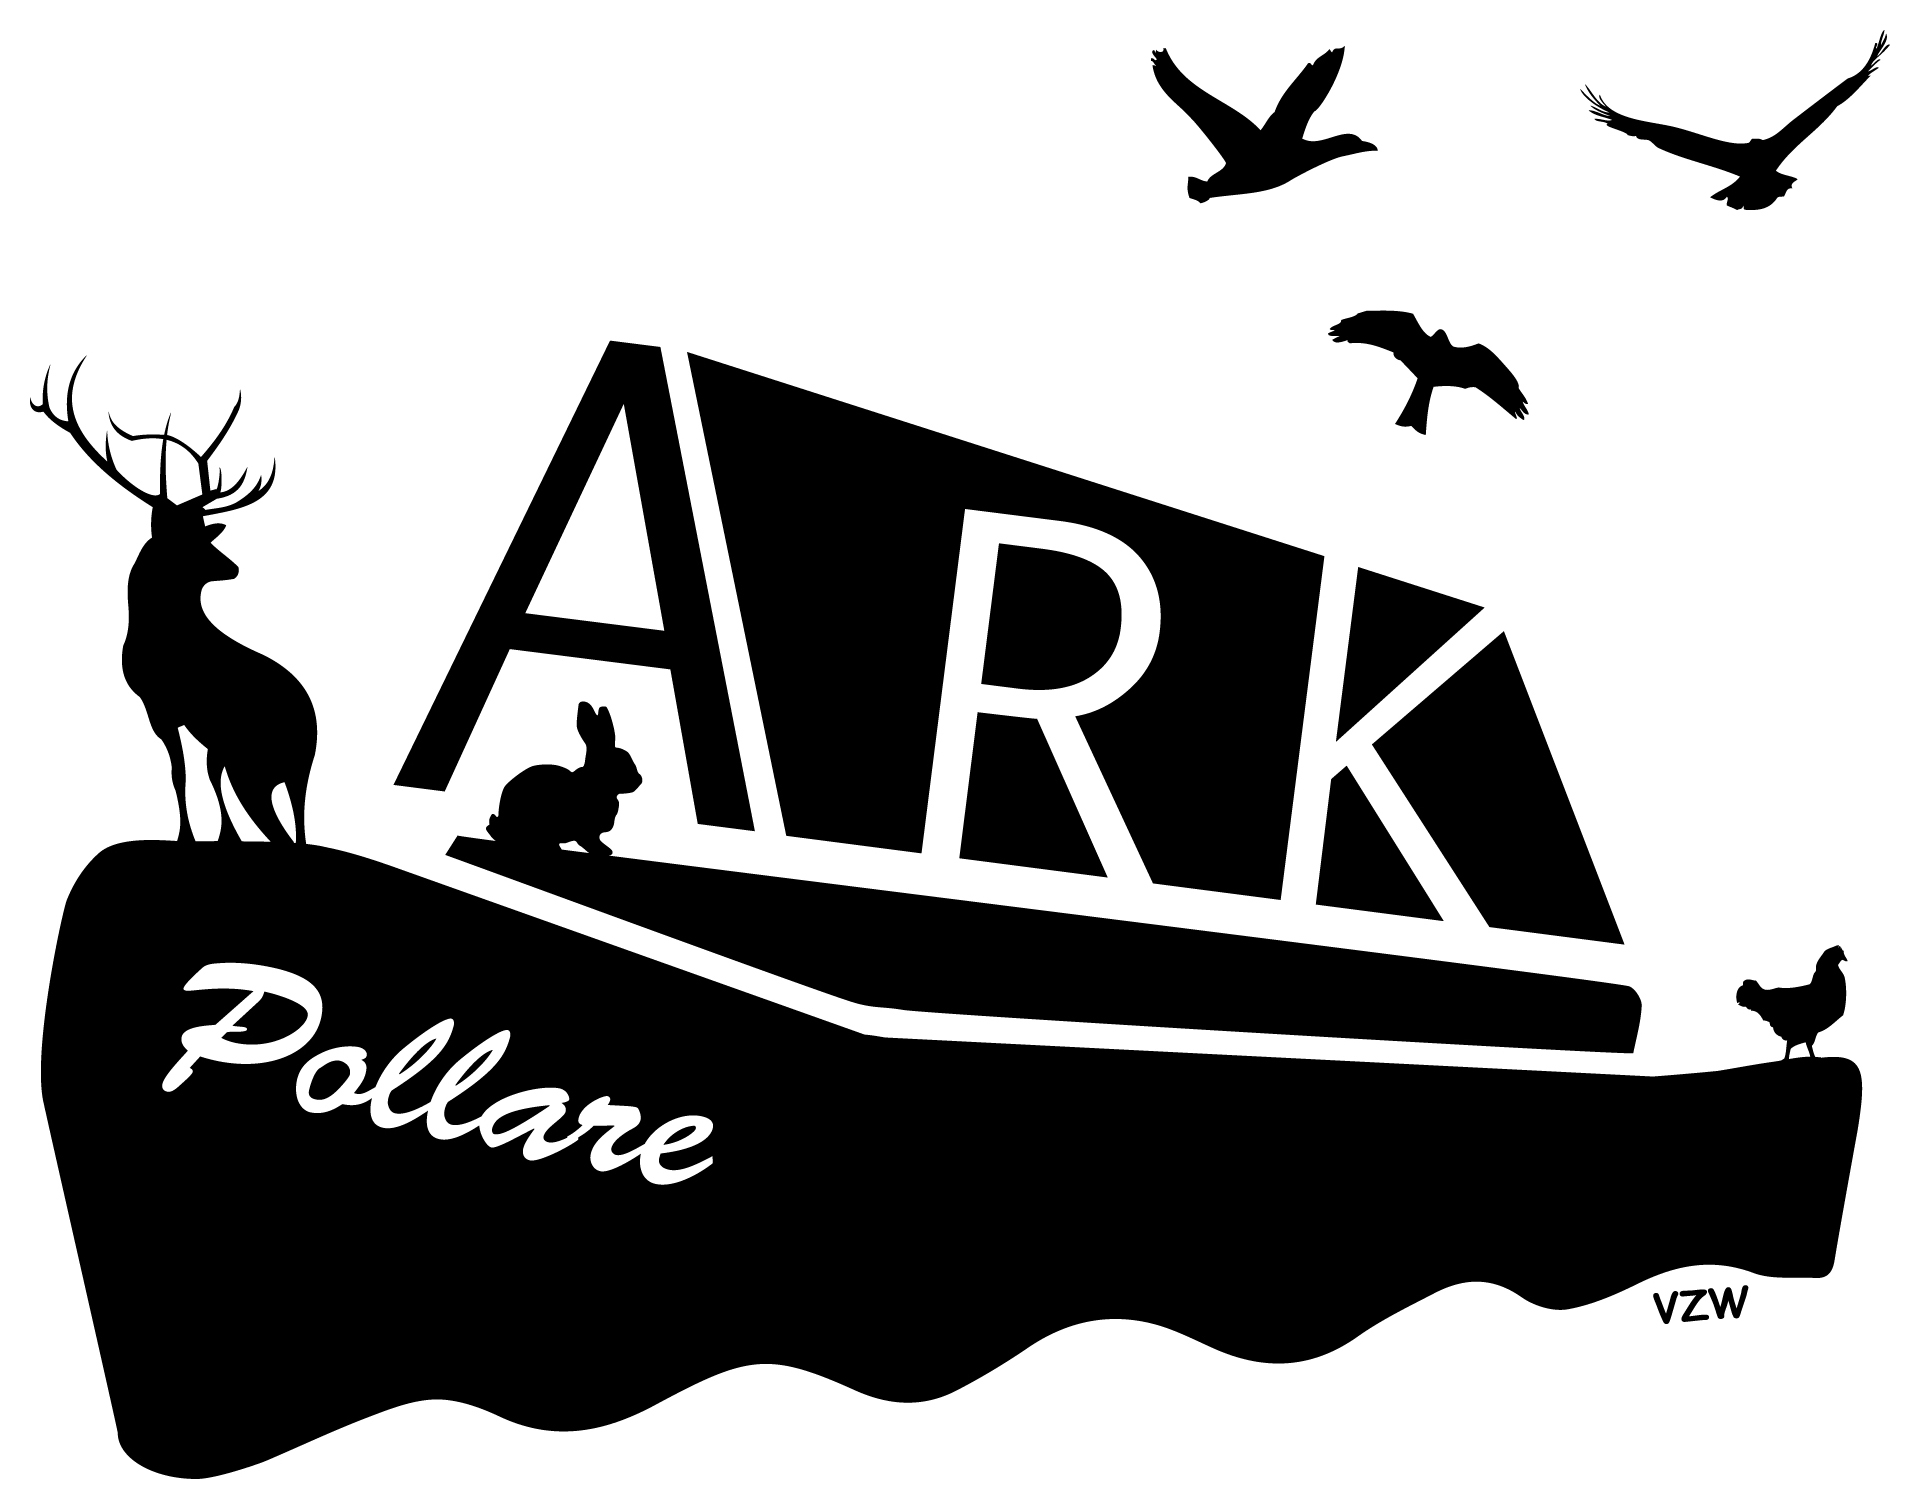 Ark Van Pollare Vzw